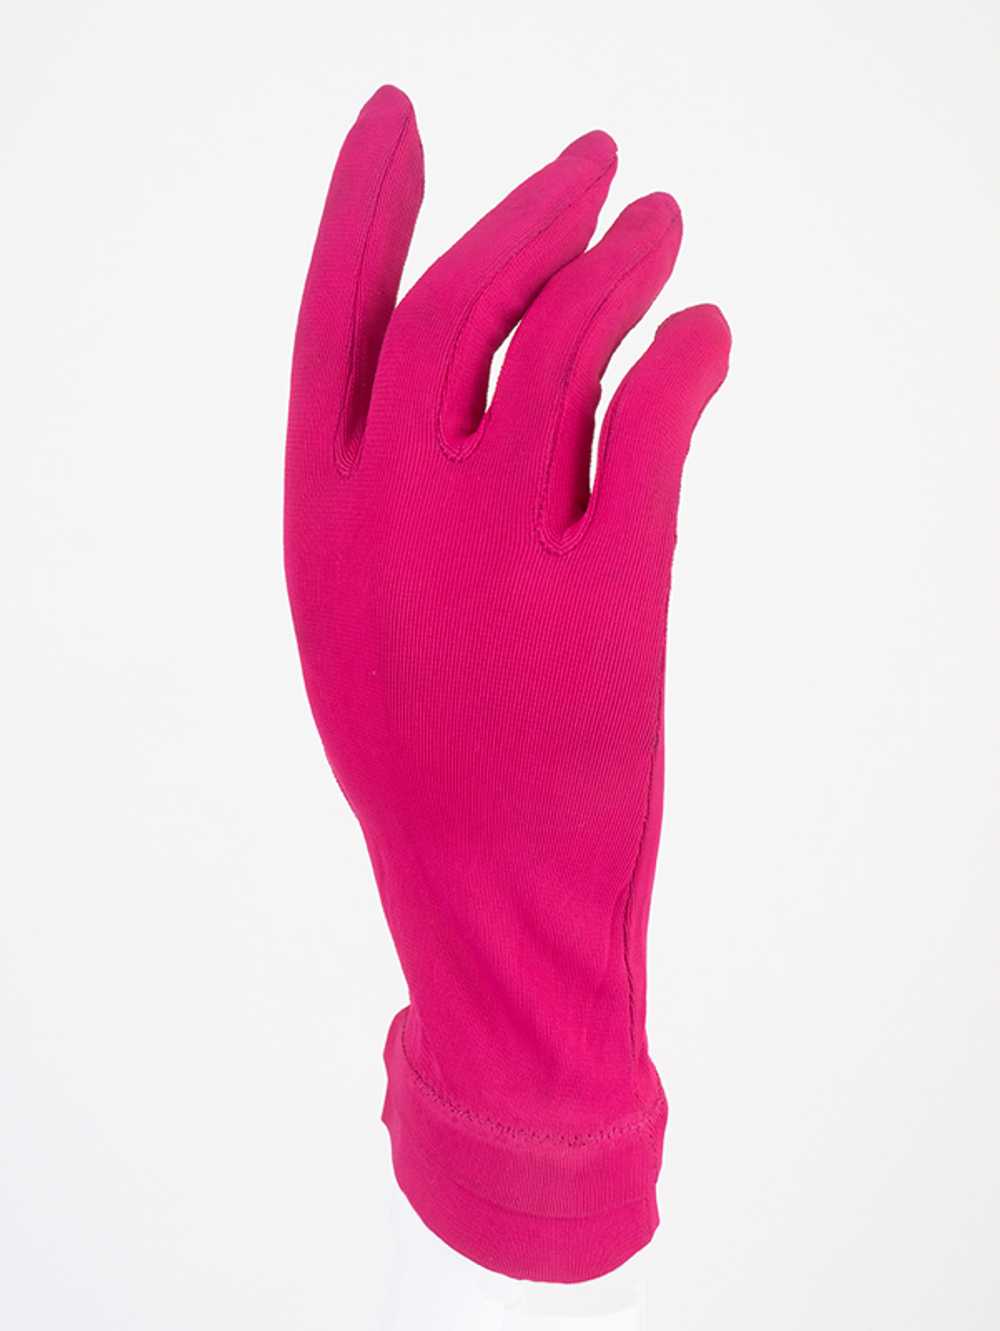 1950s Chartreuse Pink Glove Set - image 1